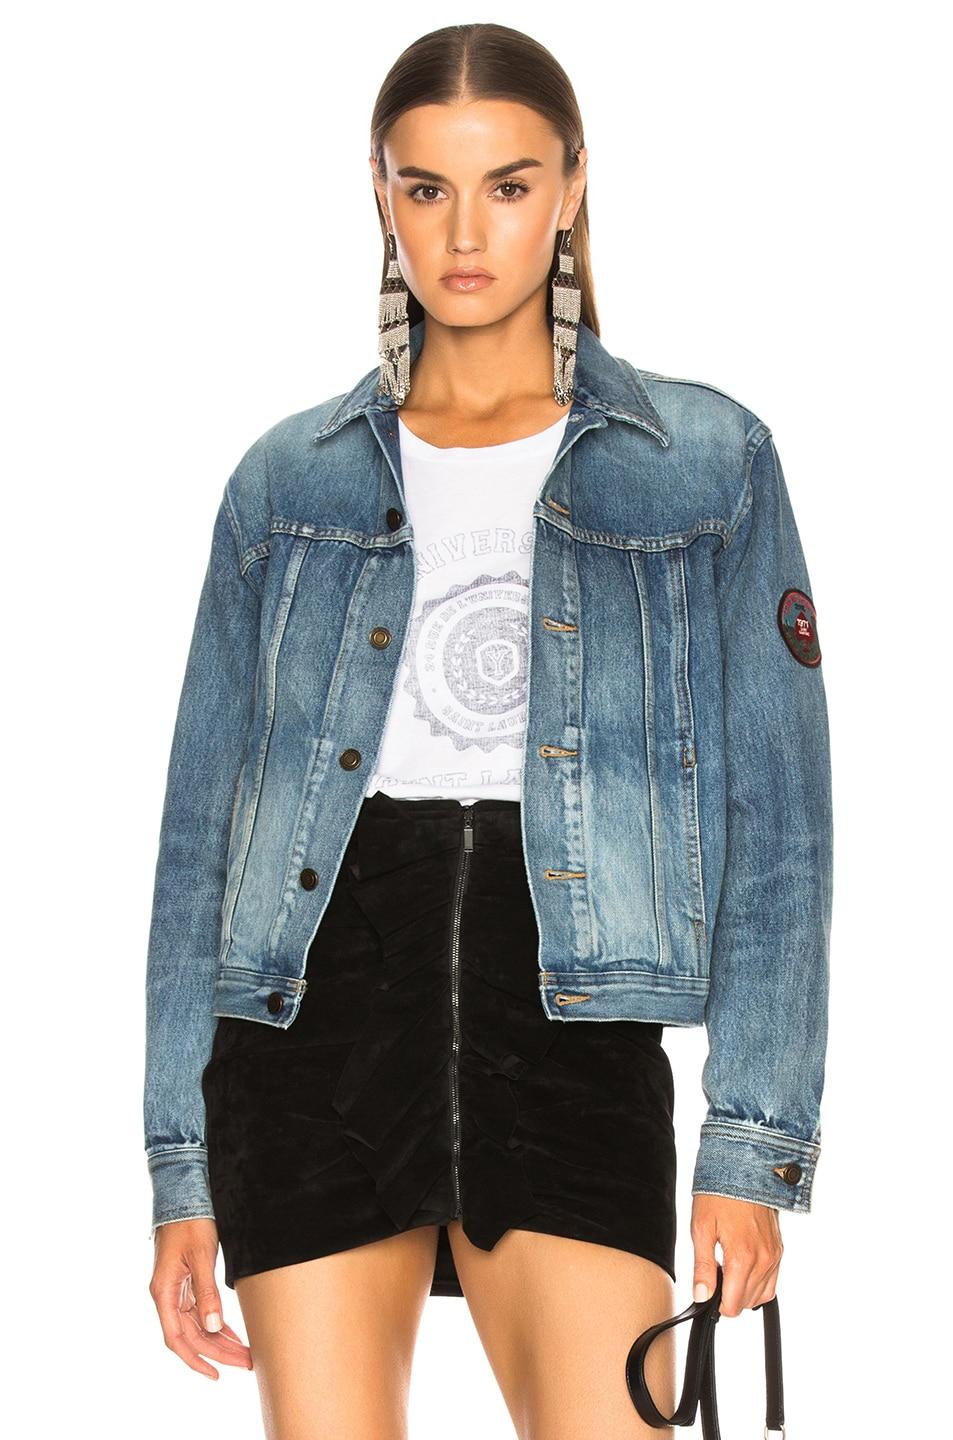 Saint Laurent Blue Jean Denim Jacket with Embroidered Badge Size Large For Sale 1